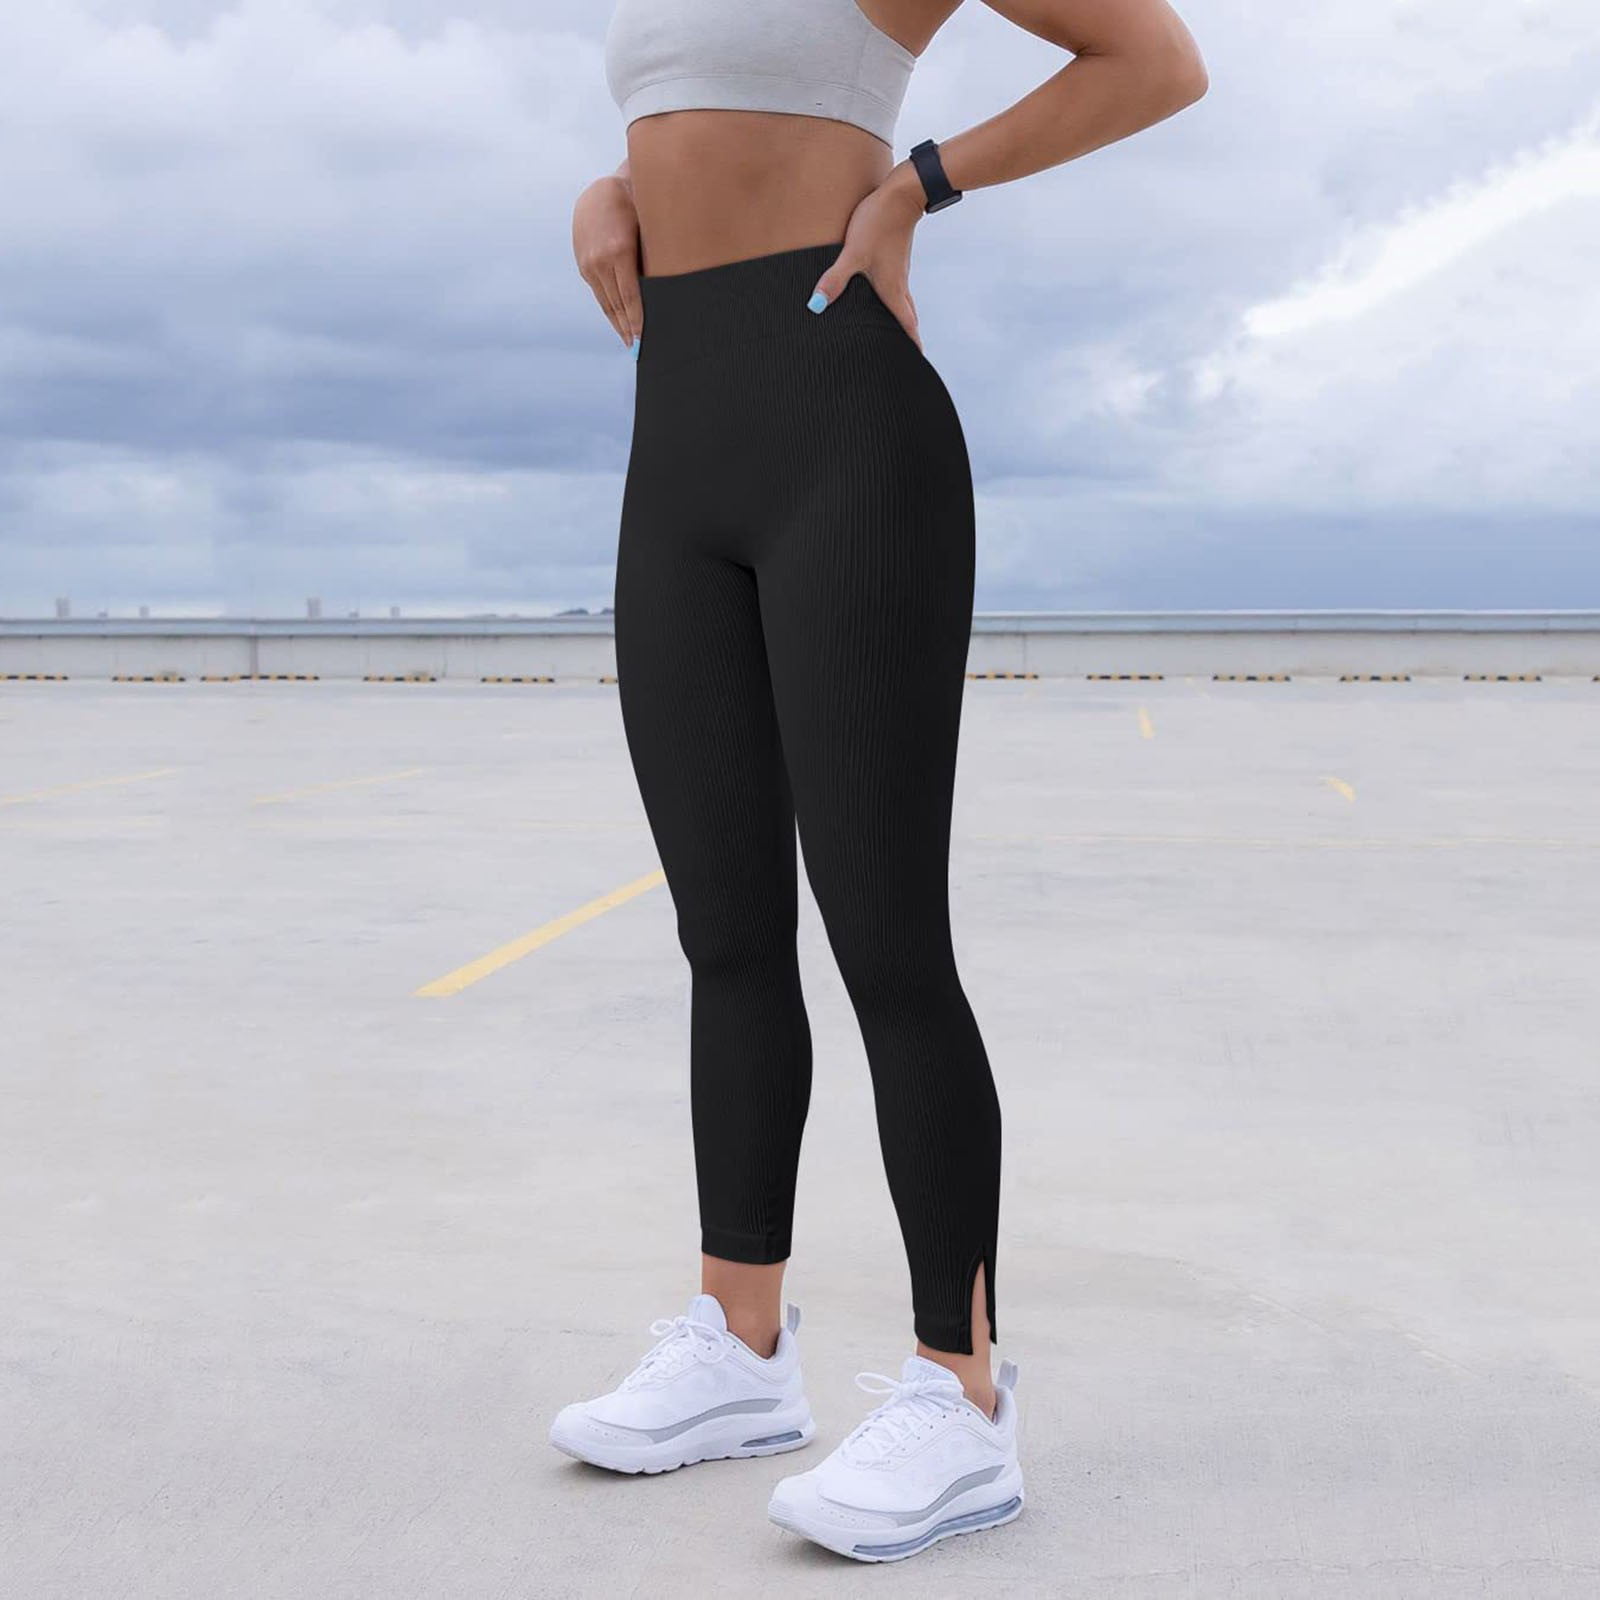 adviicd Yoga Pants For Women Yoga Leggings Women Workout